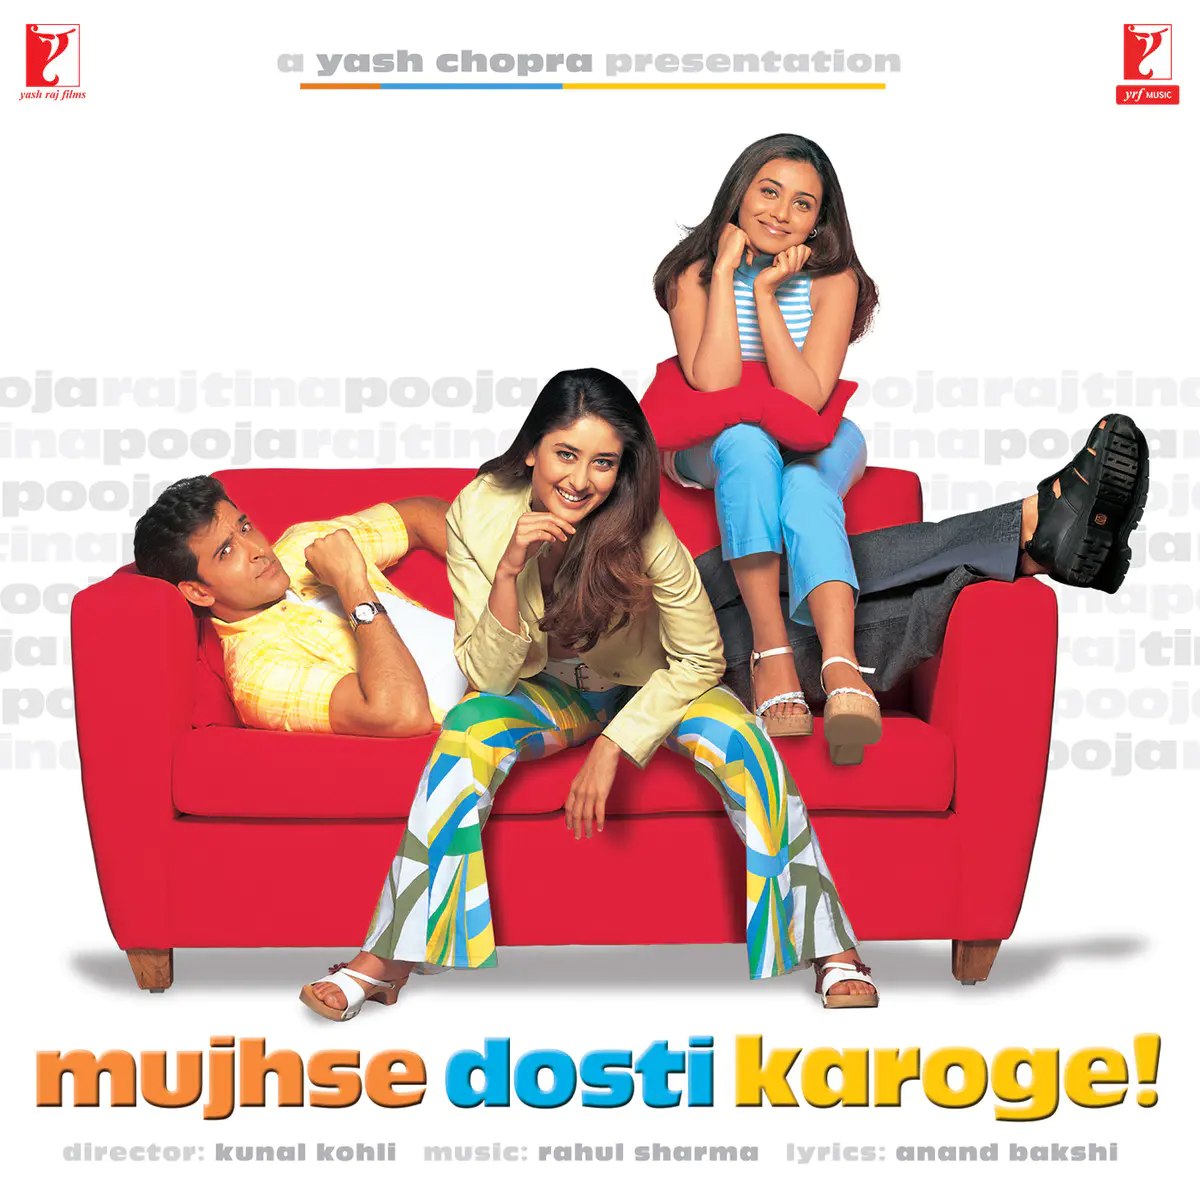 Oh My Darling Lyrics In Hindi Mujhse Dosti Karoge Oh My Darling Song Lyrics In English Free Online On Gaana Com